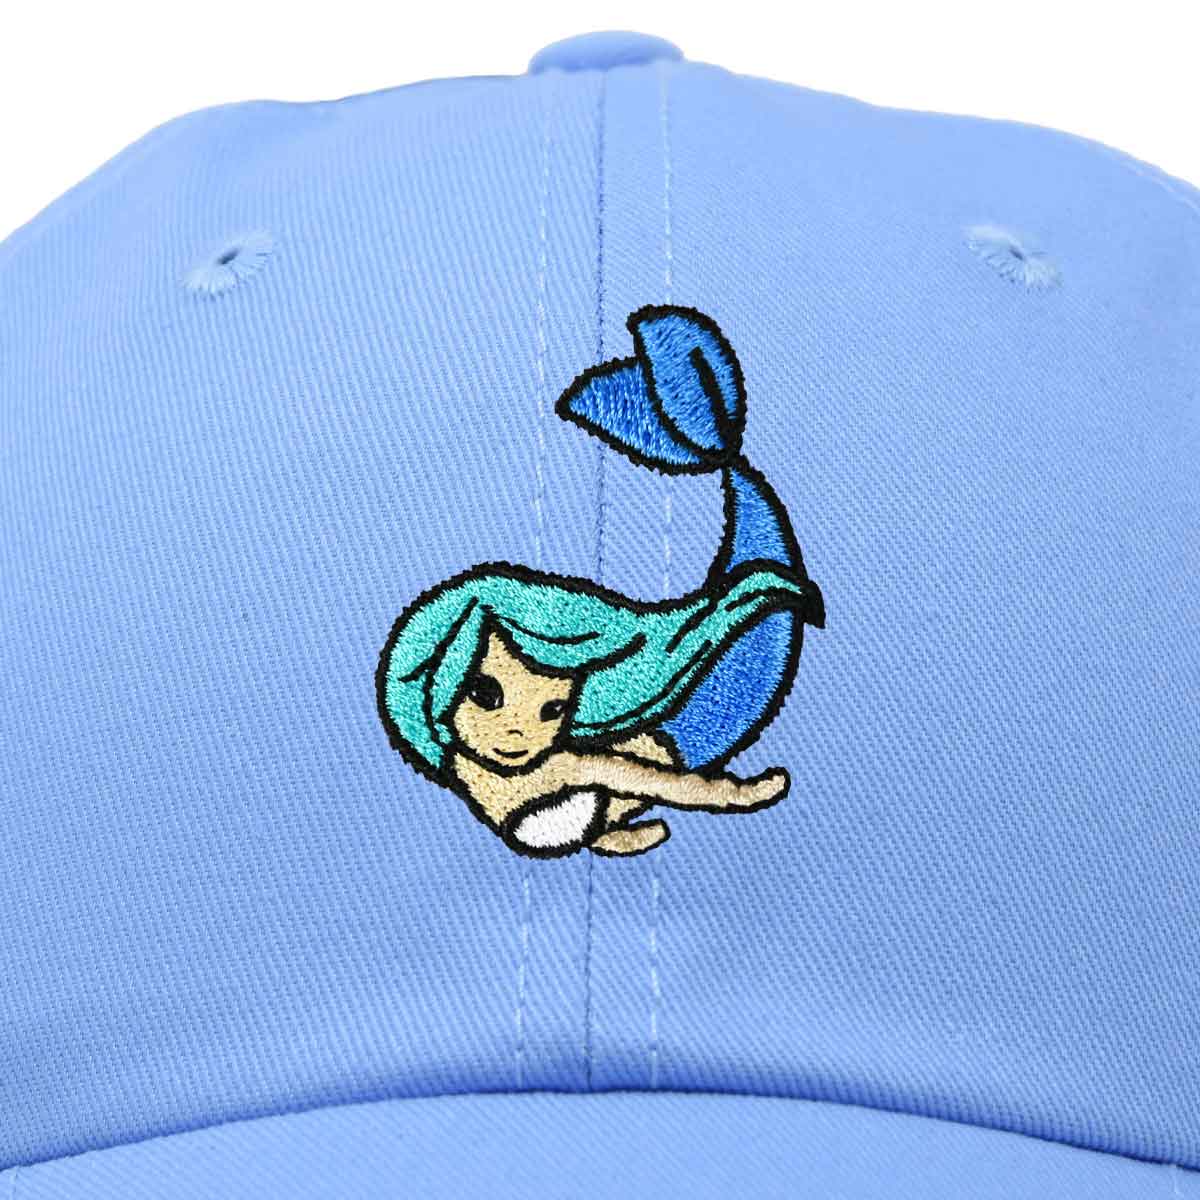 Dalix Mermaid Hat